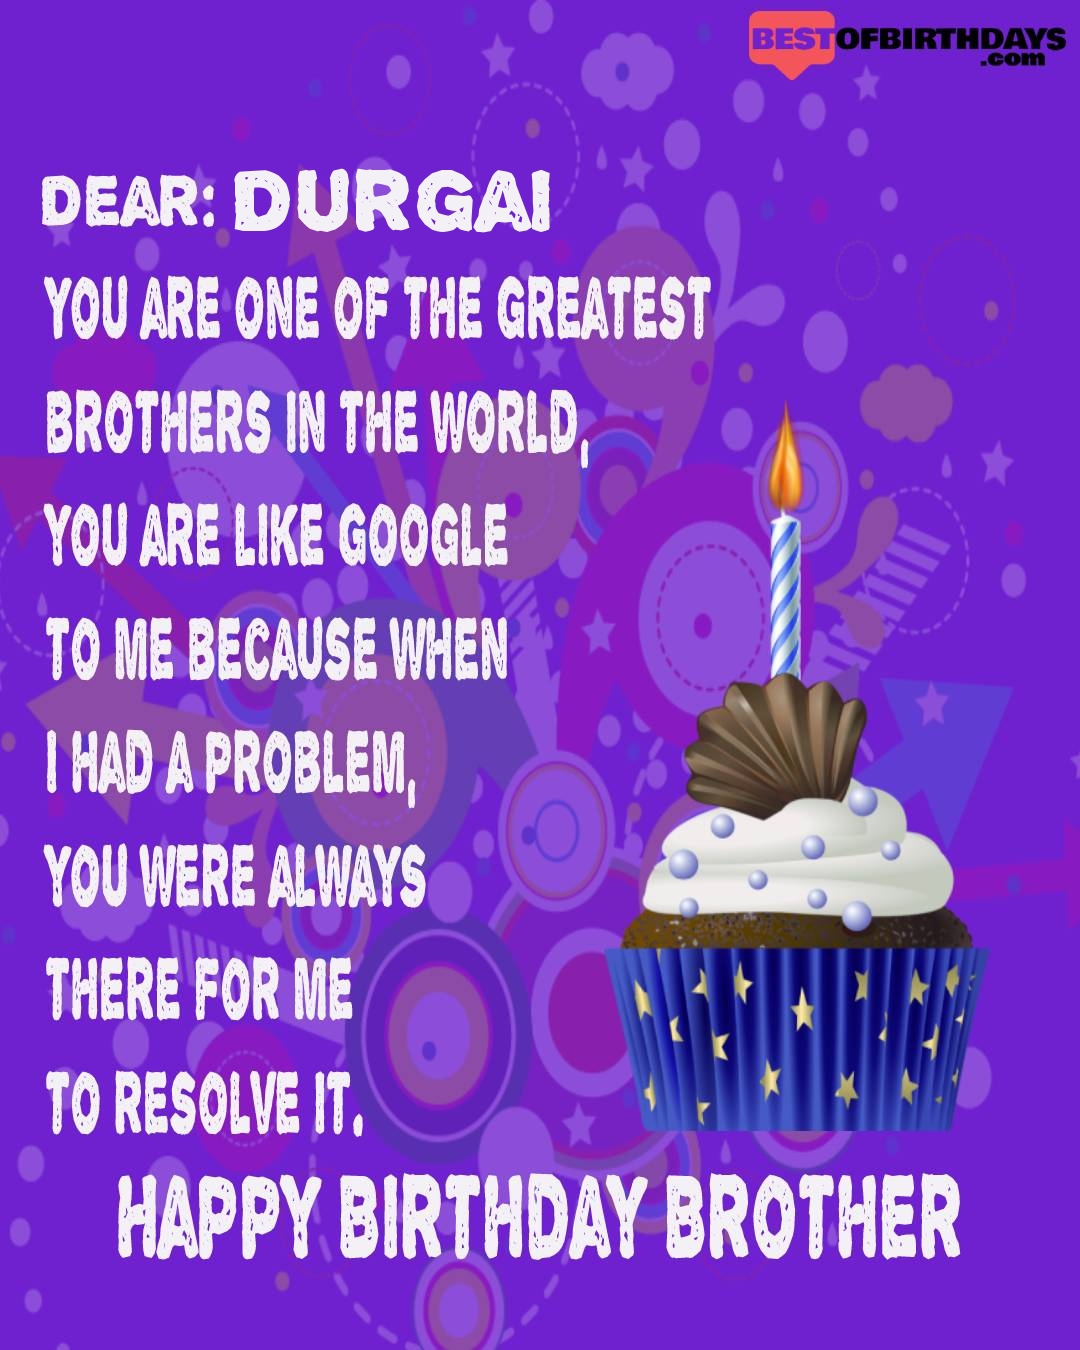 Happy birthday durgai bhai brother bro